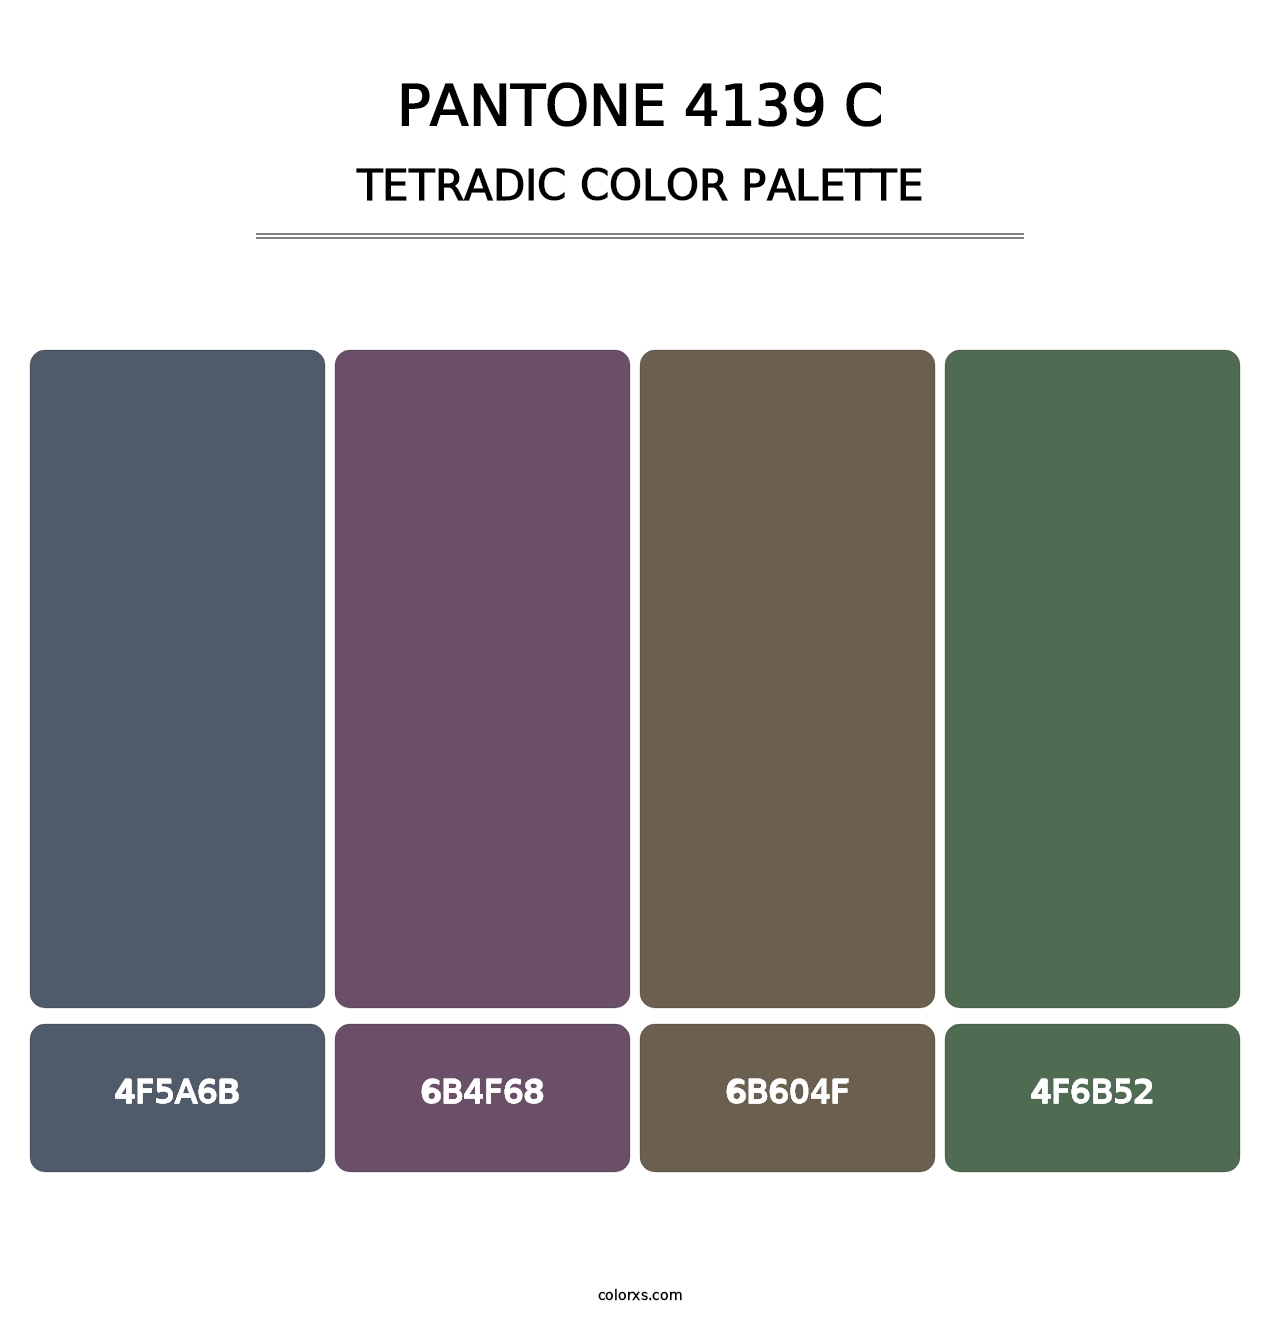 PANTONE 4139 C - Tetradic Color Palette